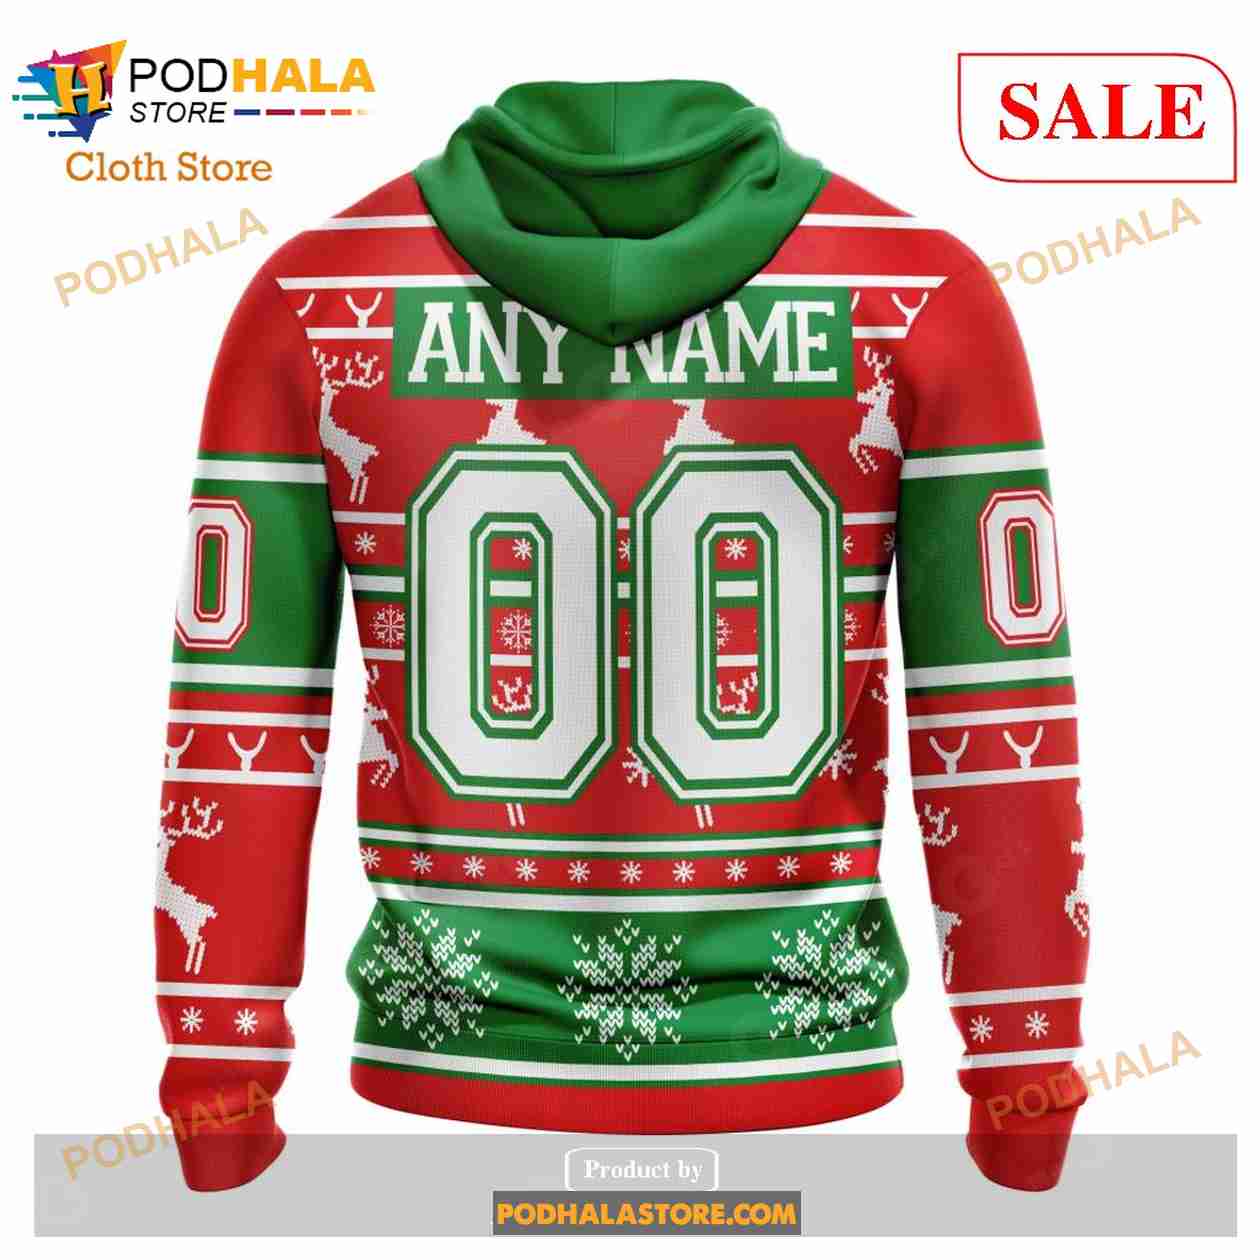 Minnesota Wild Vintage NHL Ugly Christmas Sweater